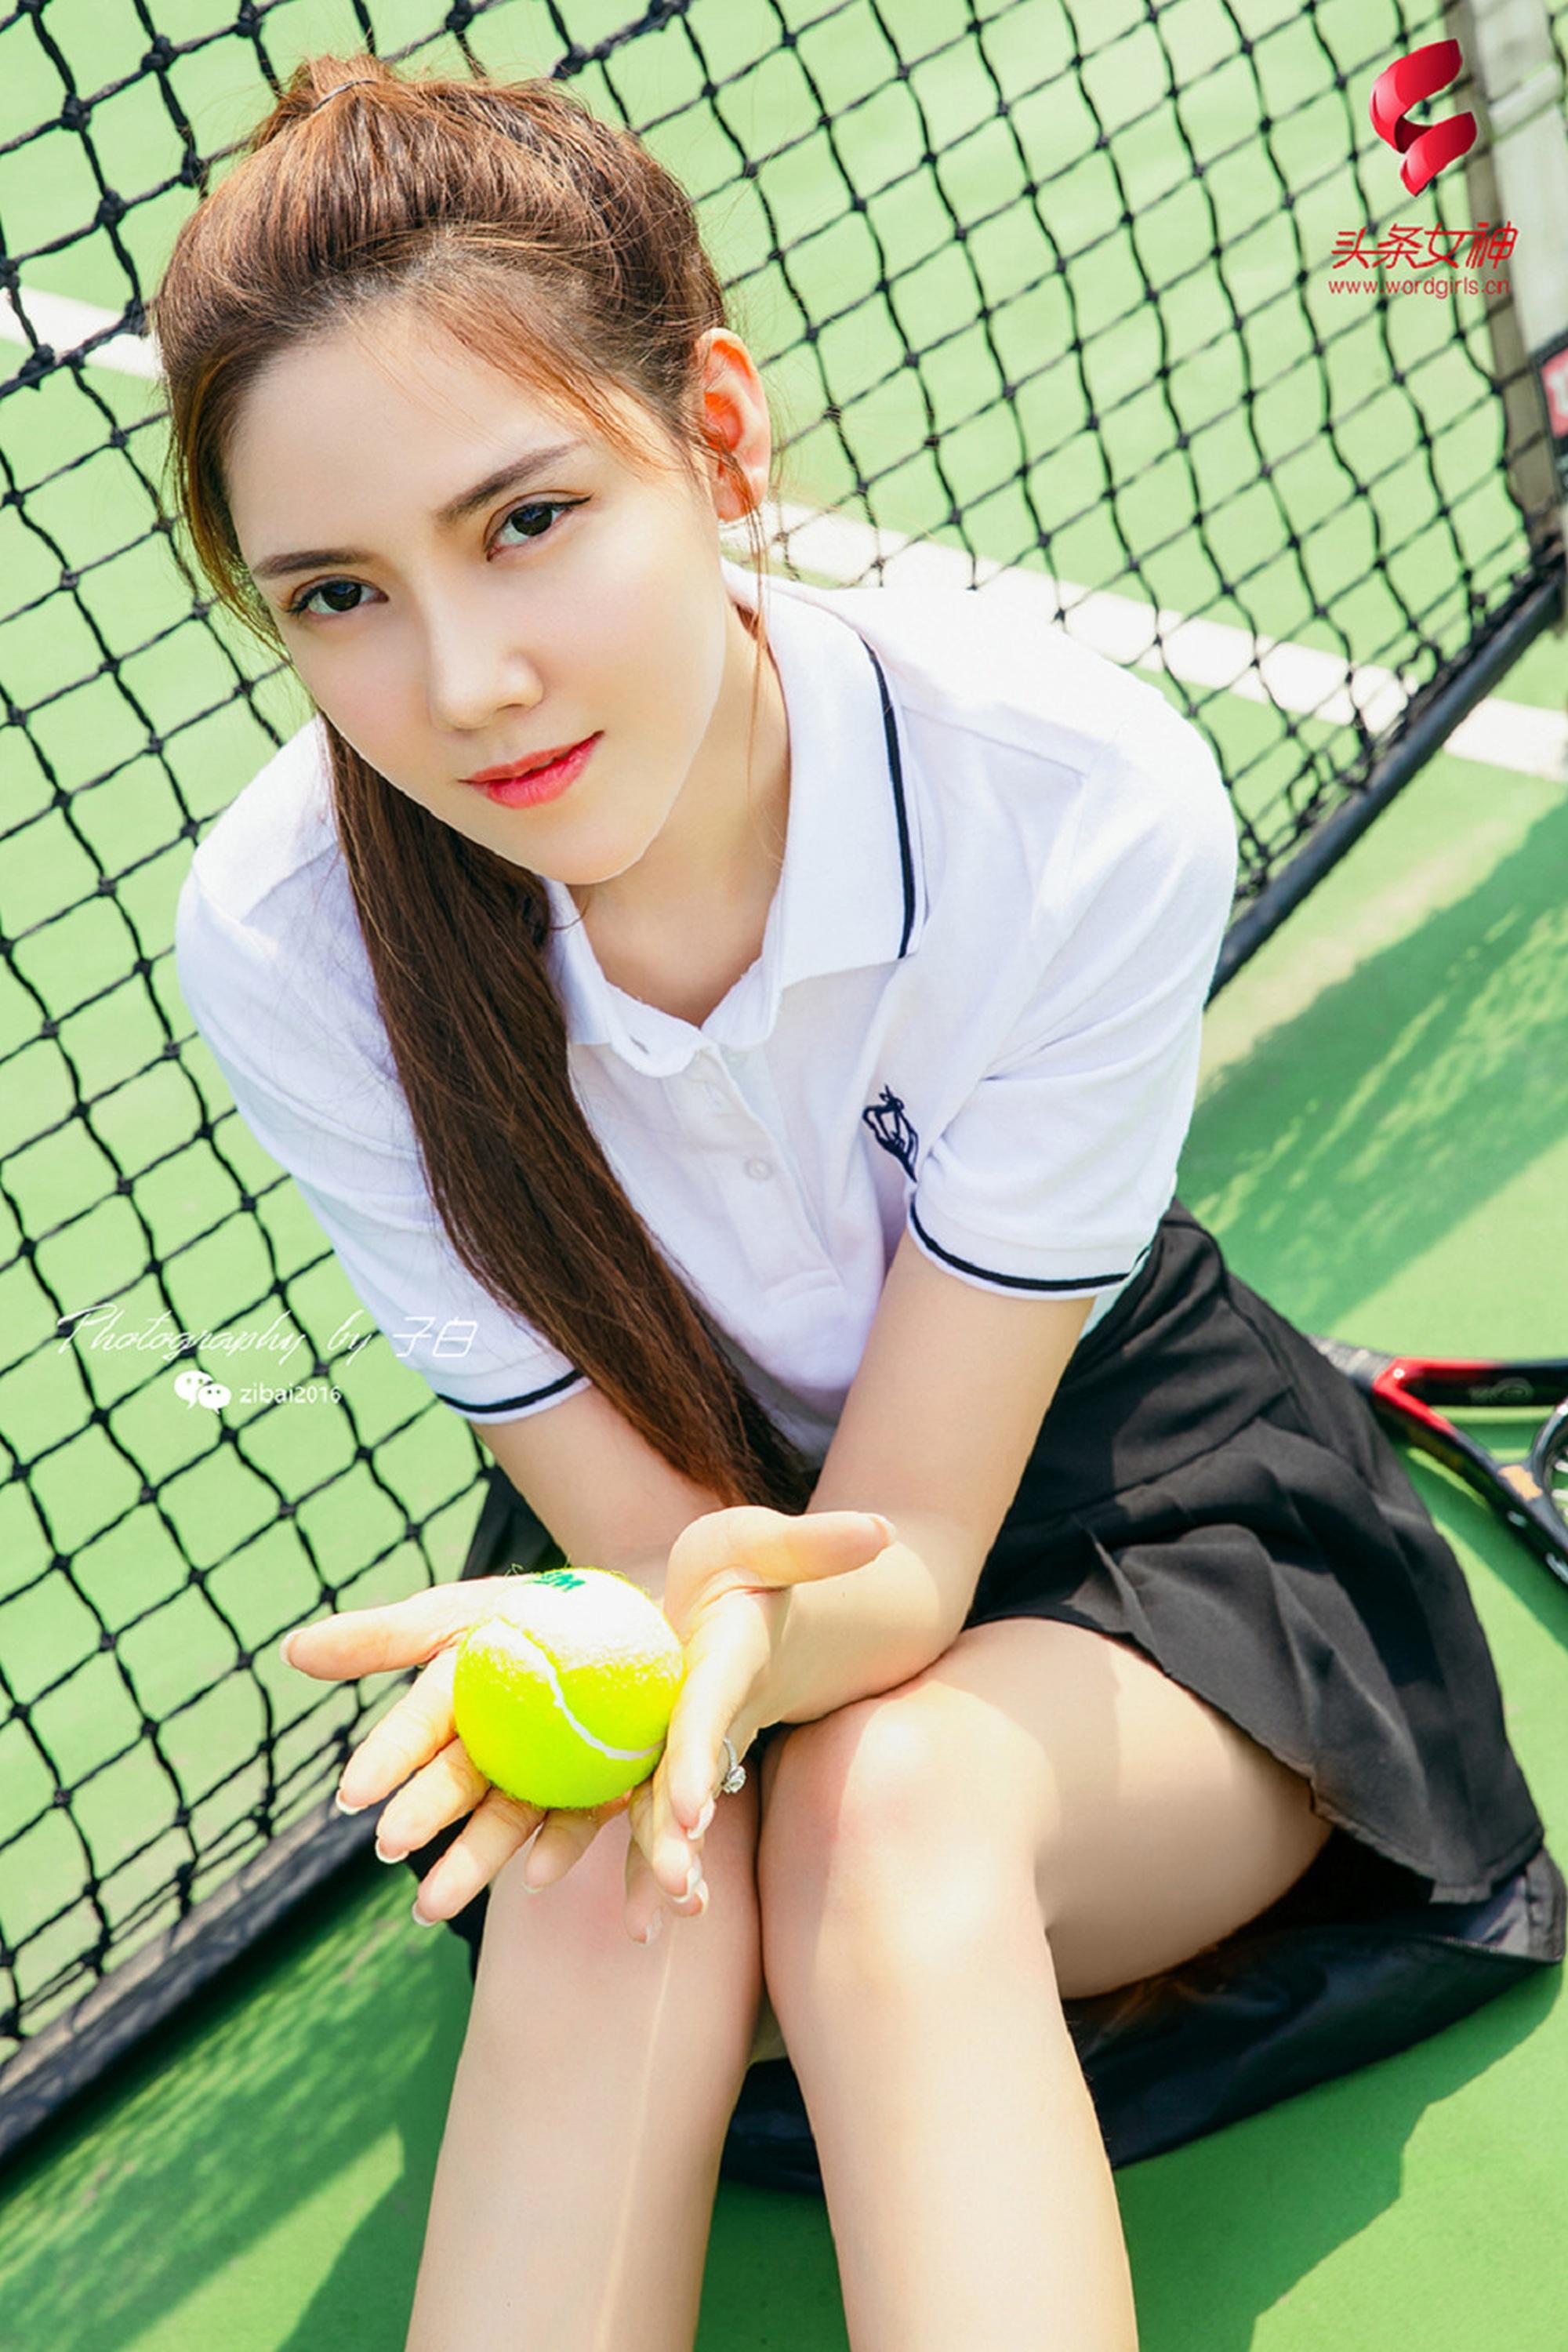 TouTiao头条女神 2019.07.13 莎伦 我是网球美少女 - 17.jpg